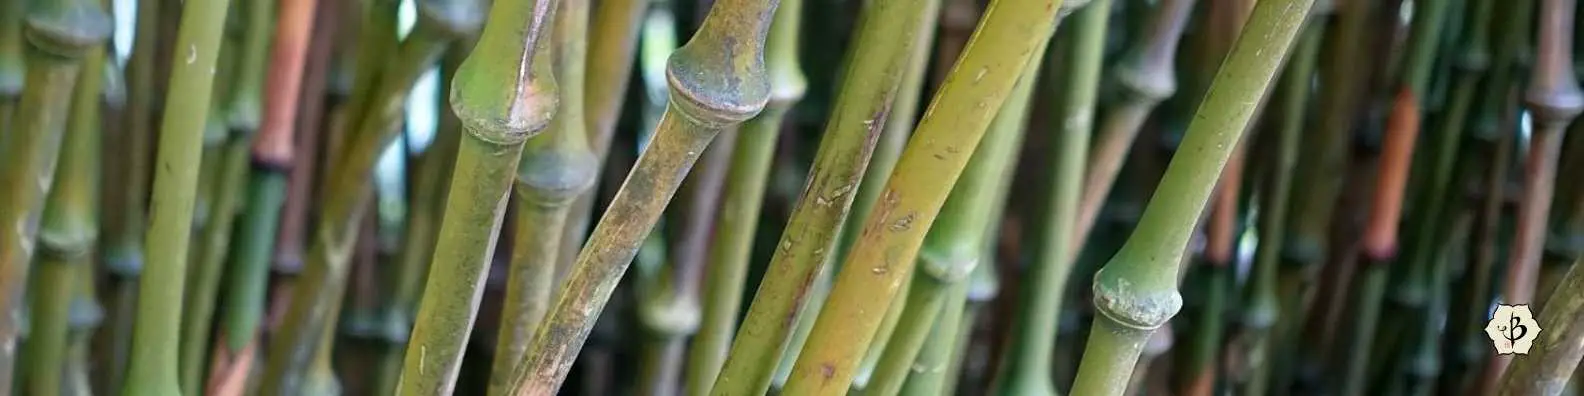 Walkingstick bamboo banner